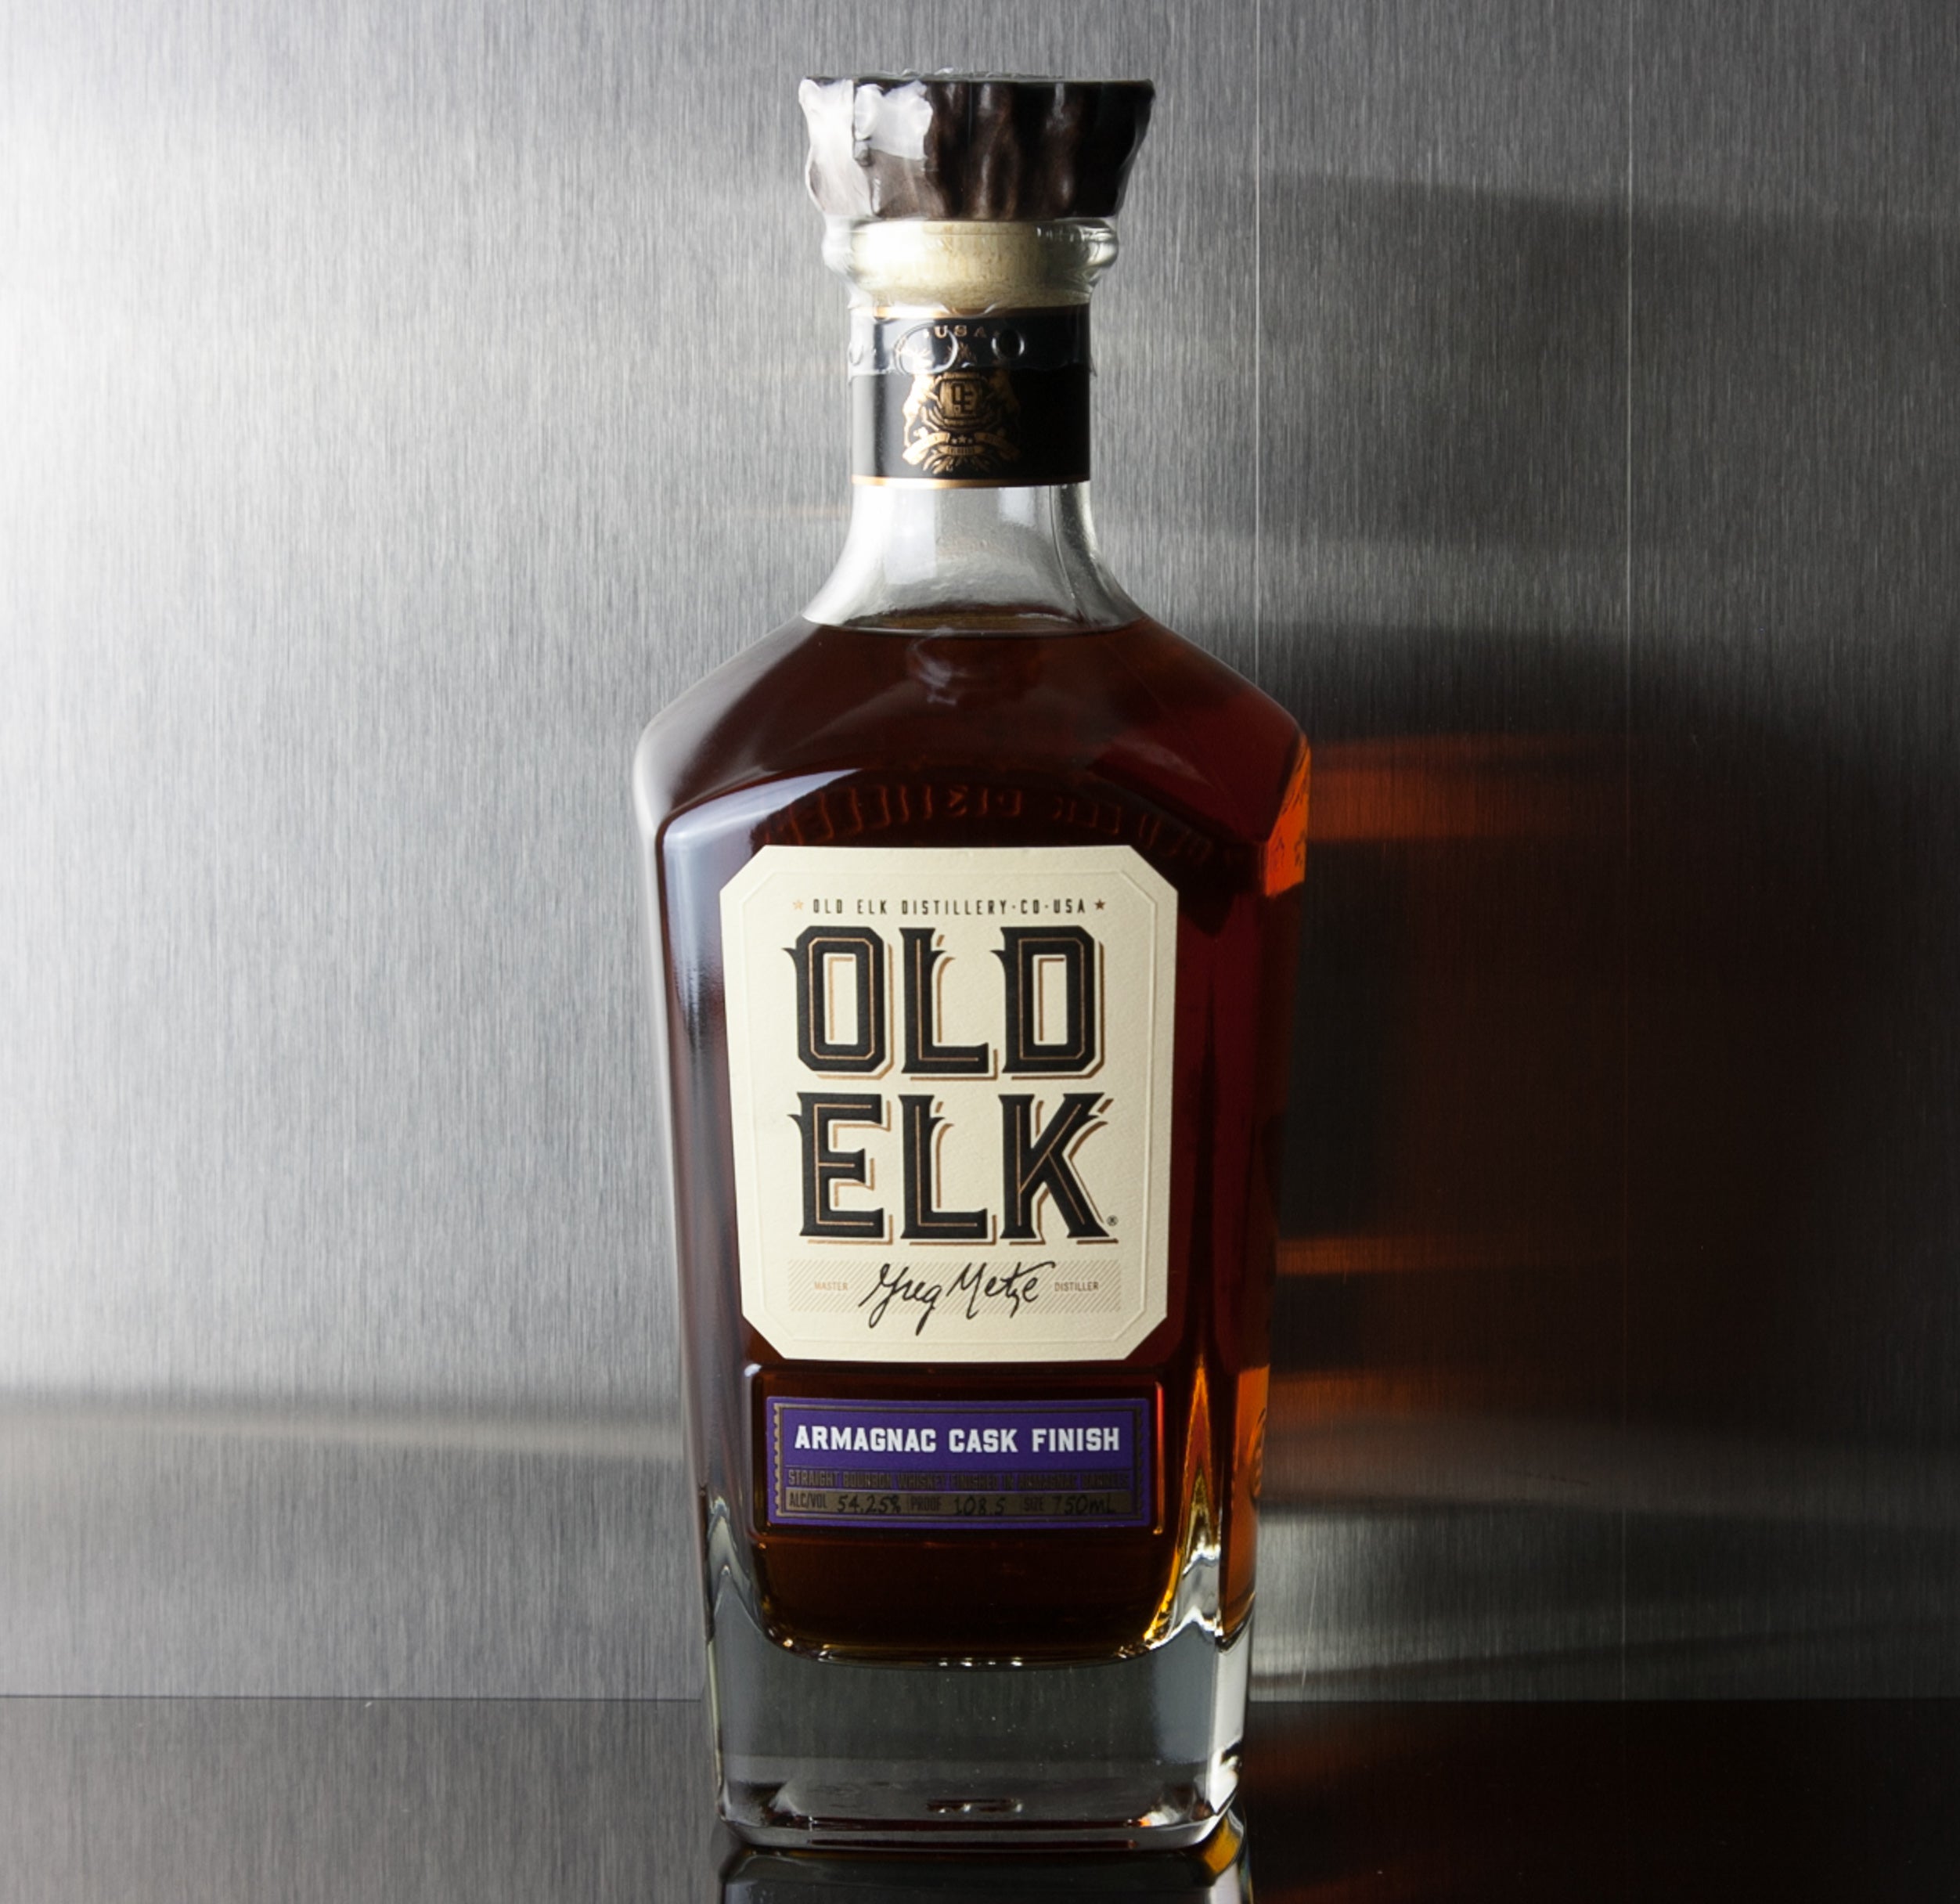 Old Elk Armagnac Cask Finish Bourbon